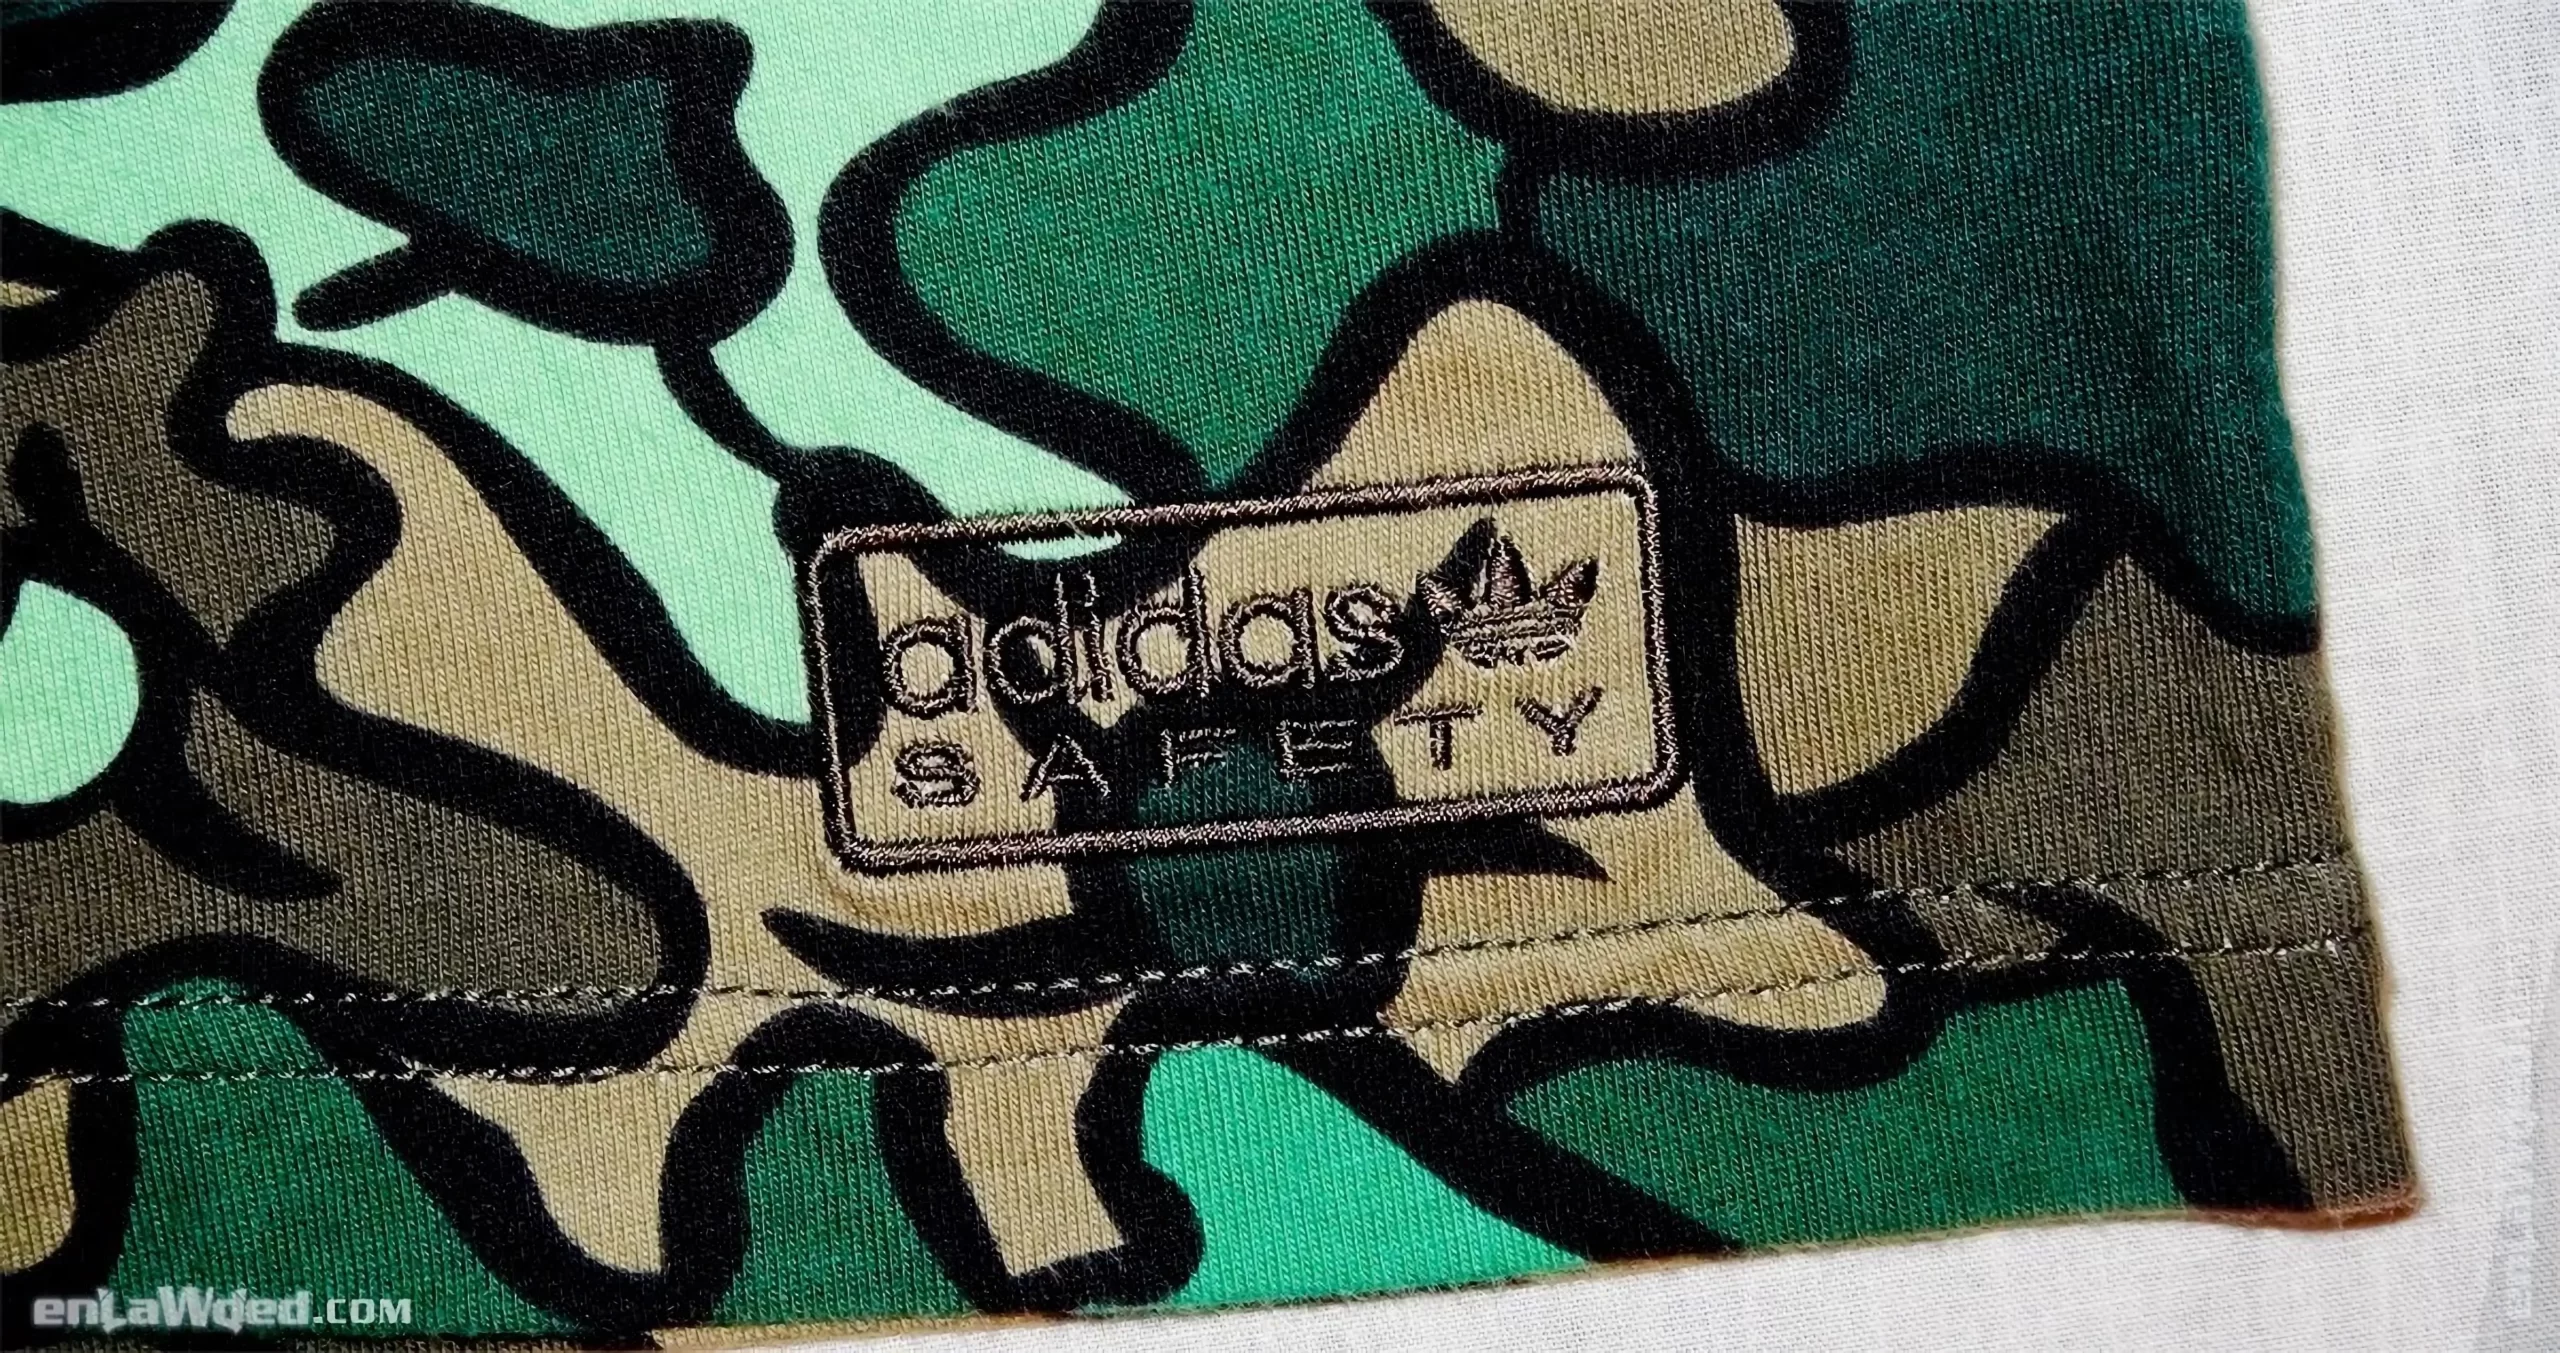 Men’s 2006 Adidas Originals Green Safety Camo T-Shirt: Startling (EnLawded.com file #lmchhpejb21nqbejfyt)